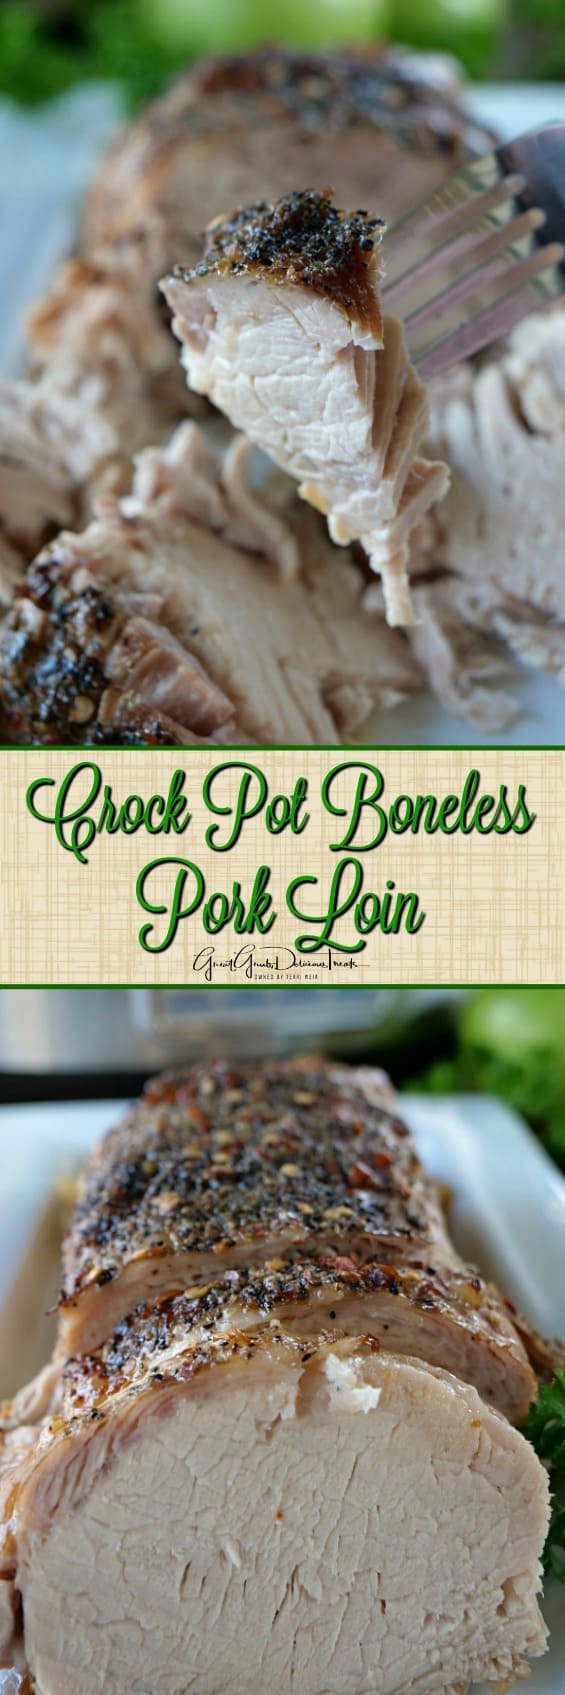 Crock Pot Boneless Pork Loin